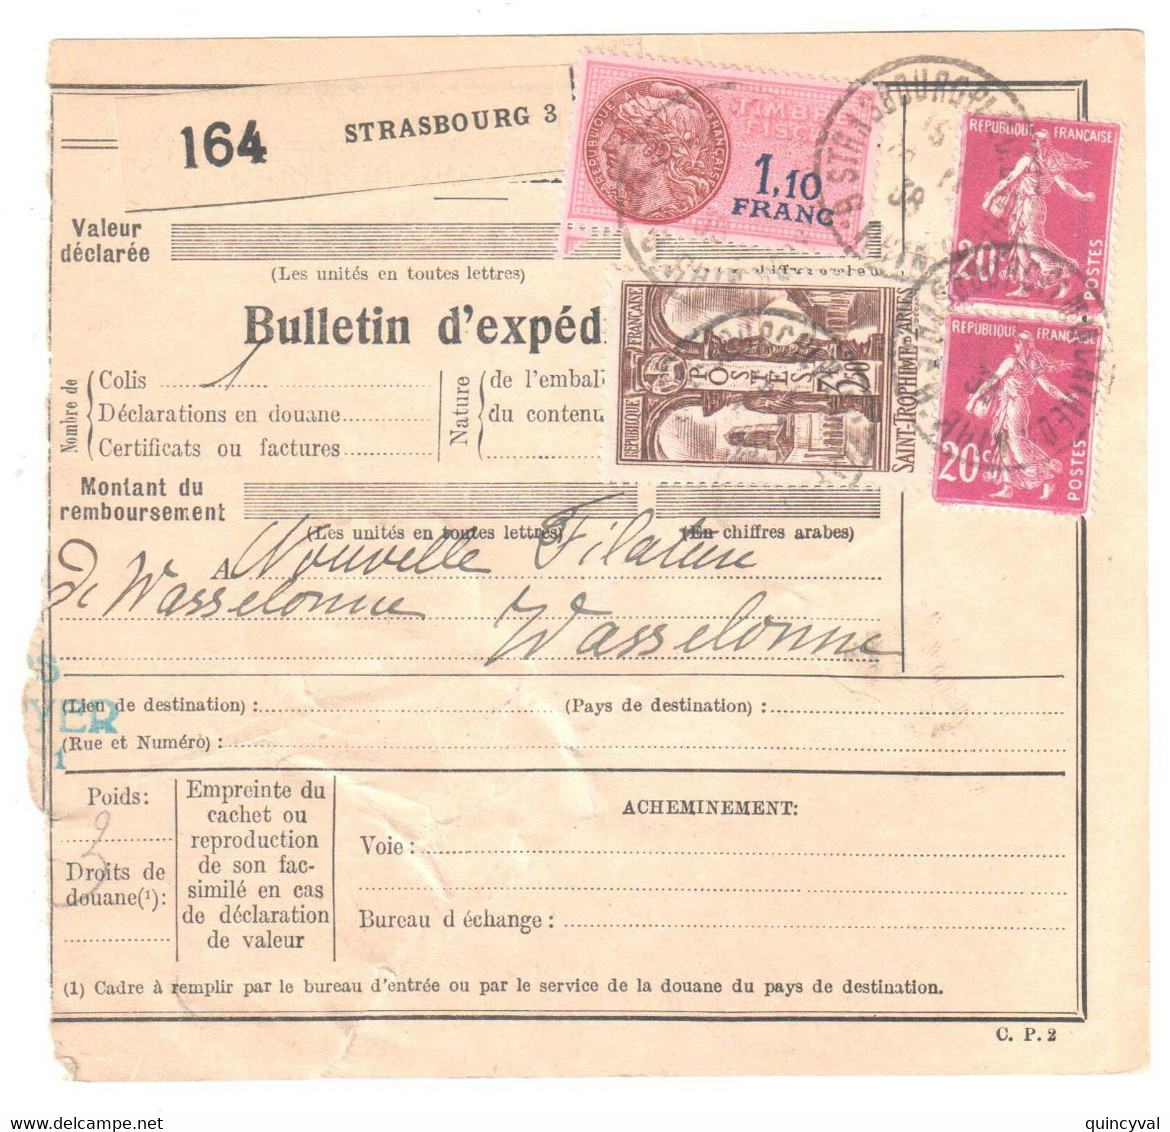 STRASBOURG Bas Rhin Bulletin D'expédition Alsace Lorraine 1938 3,50 F St Trophime 20c Semeuse Yv 302 139 - Lettres & Documents